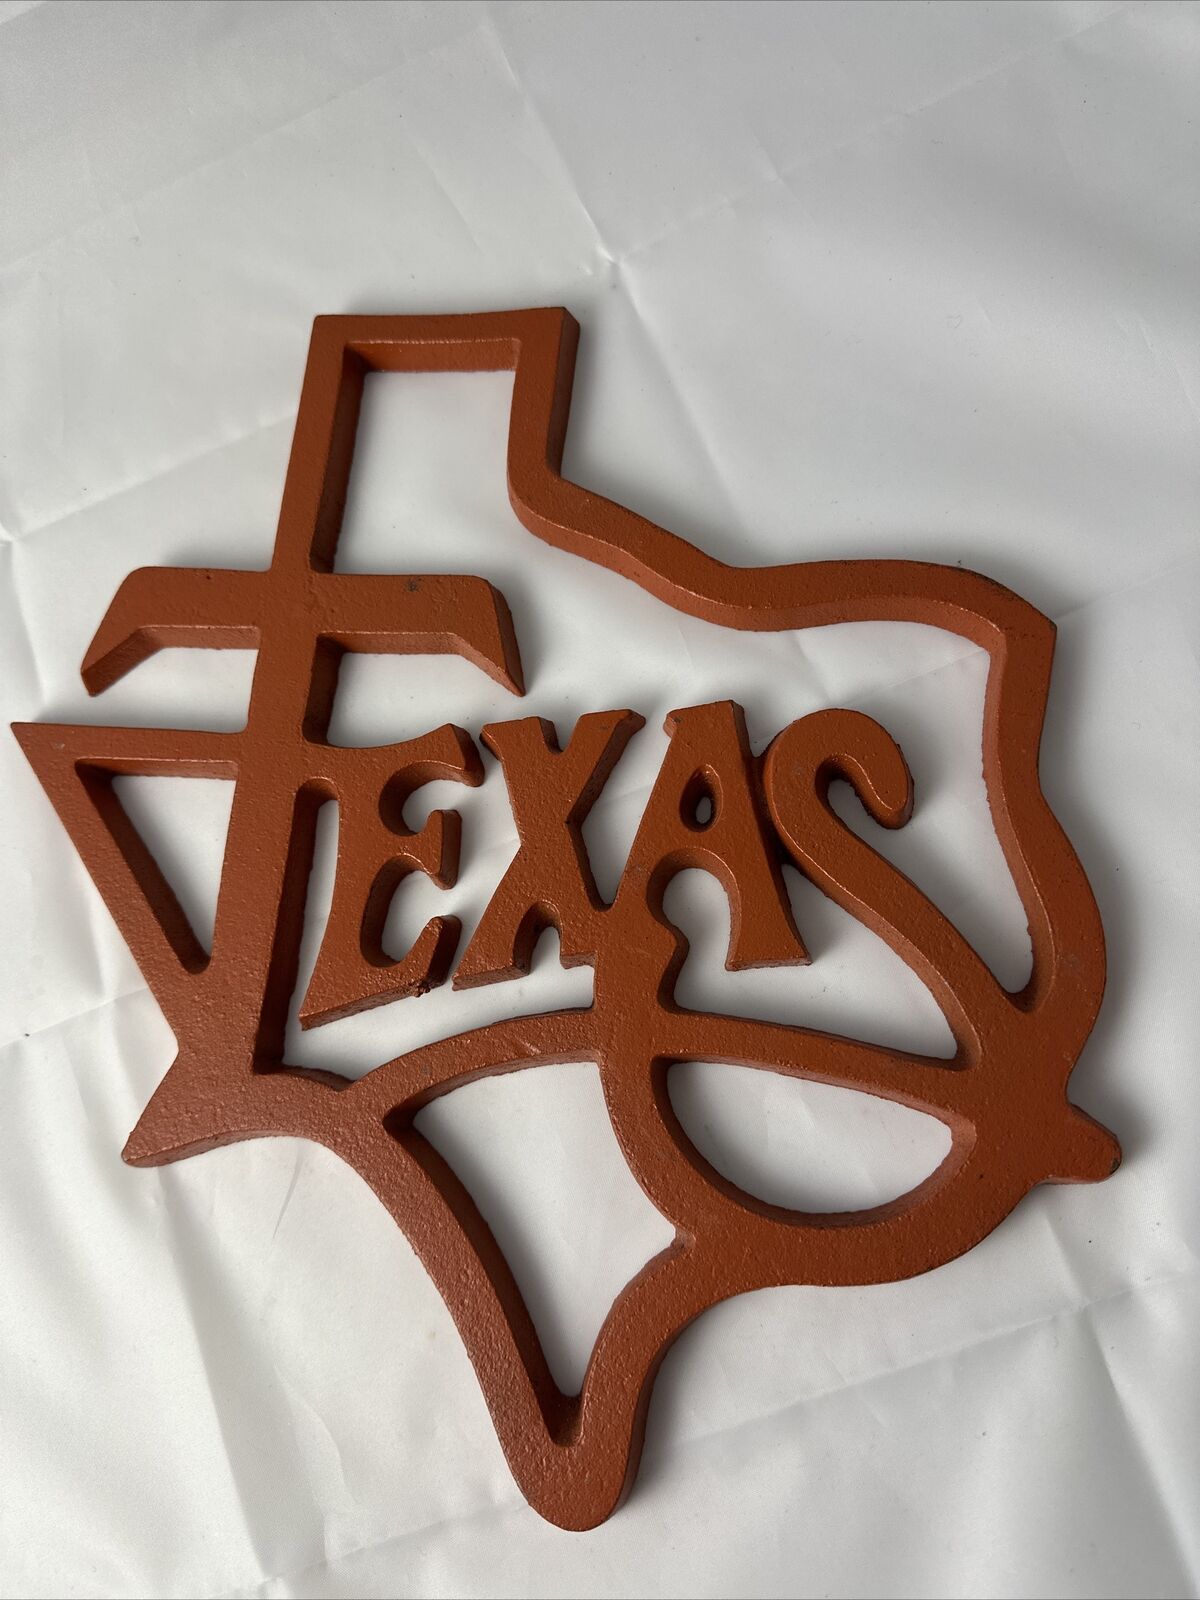 Vintage Cast iron Texas wall plaque kitchen trivet rusty rustic look